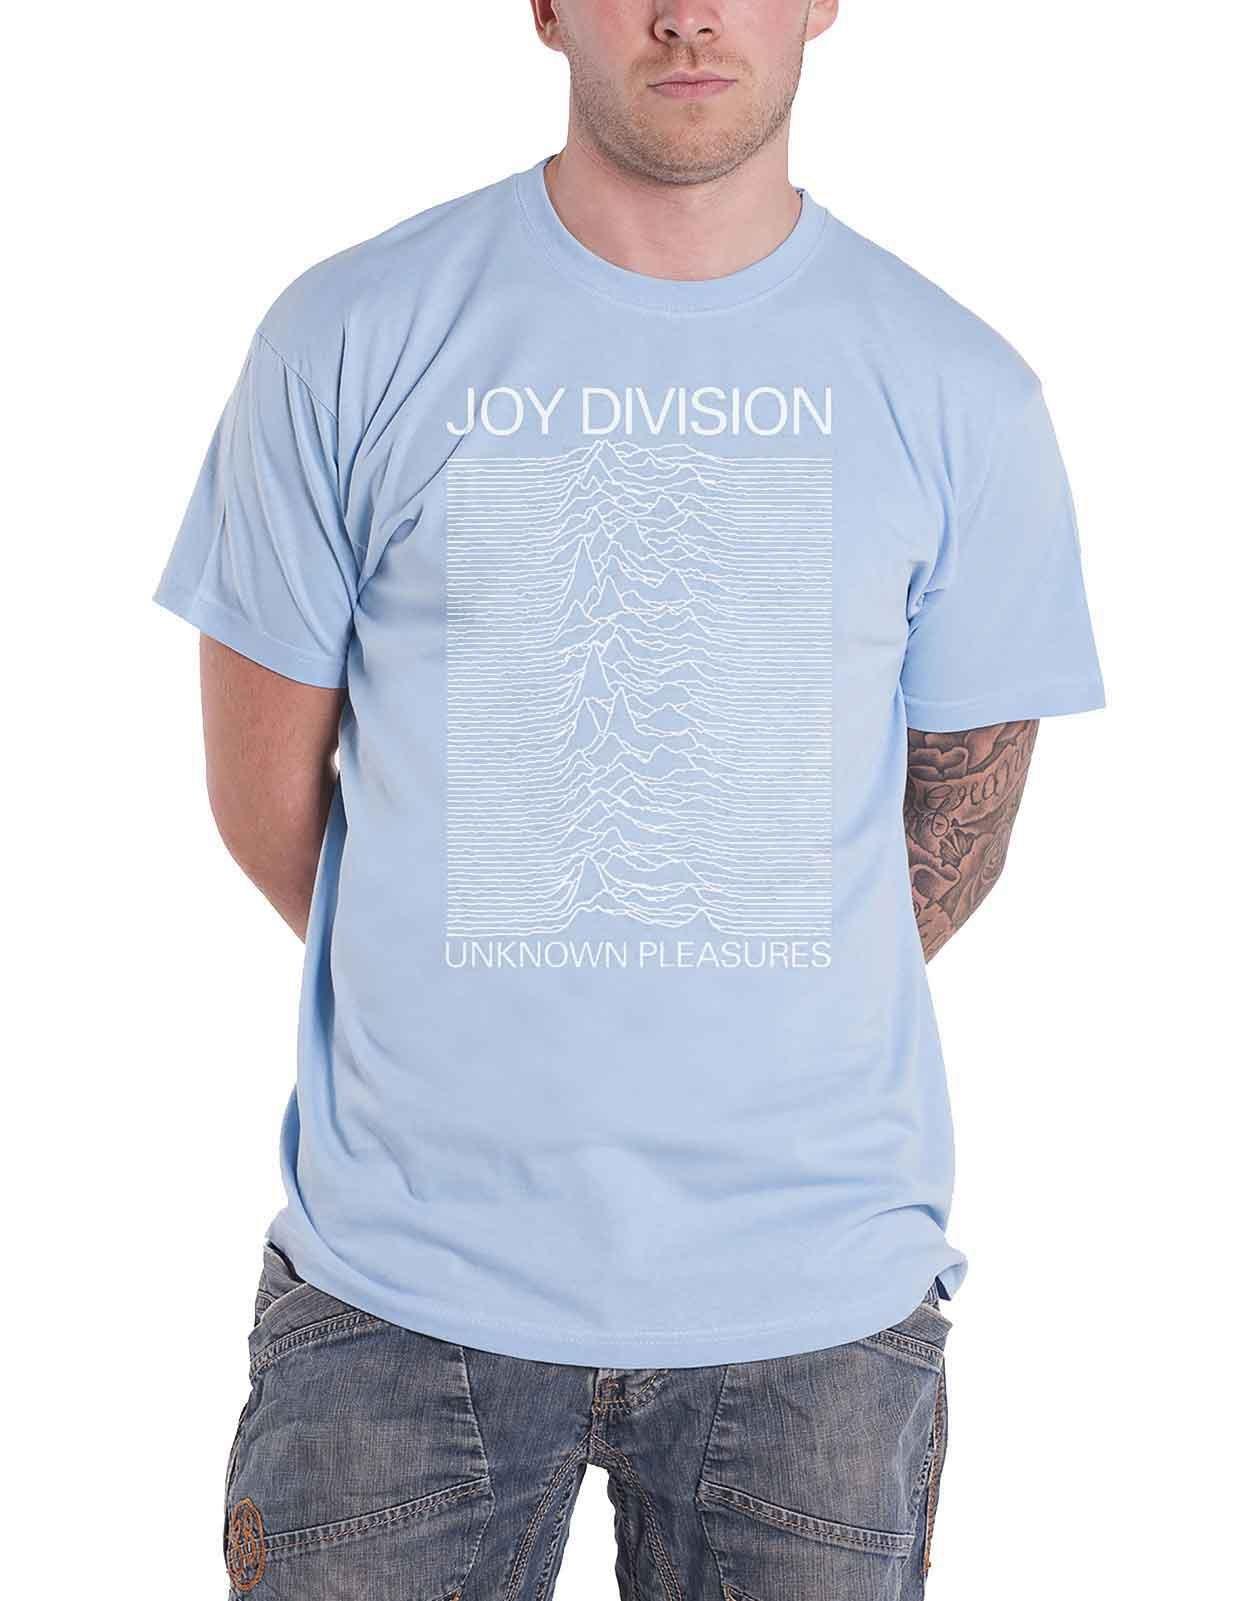 Бело-синяя футболка Unknown Pleasures Joy Division, синий футболка joy division футболка dantes инферно joy division готическая рубашка ян кертис post punk рубашка unknown приятности готическая рубашка